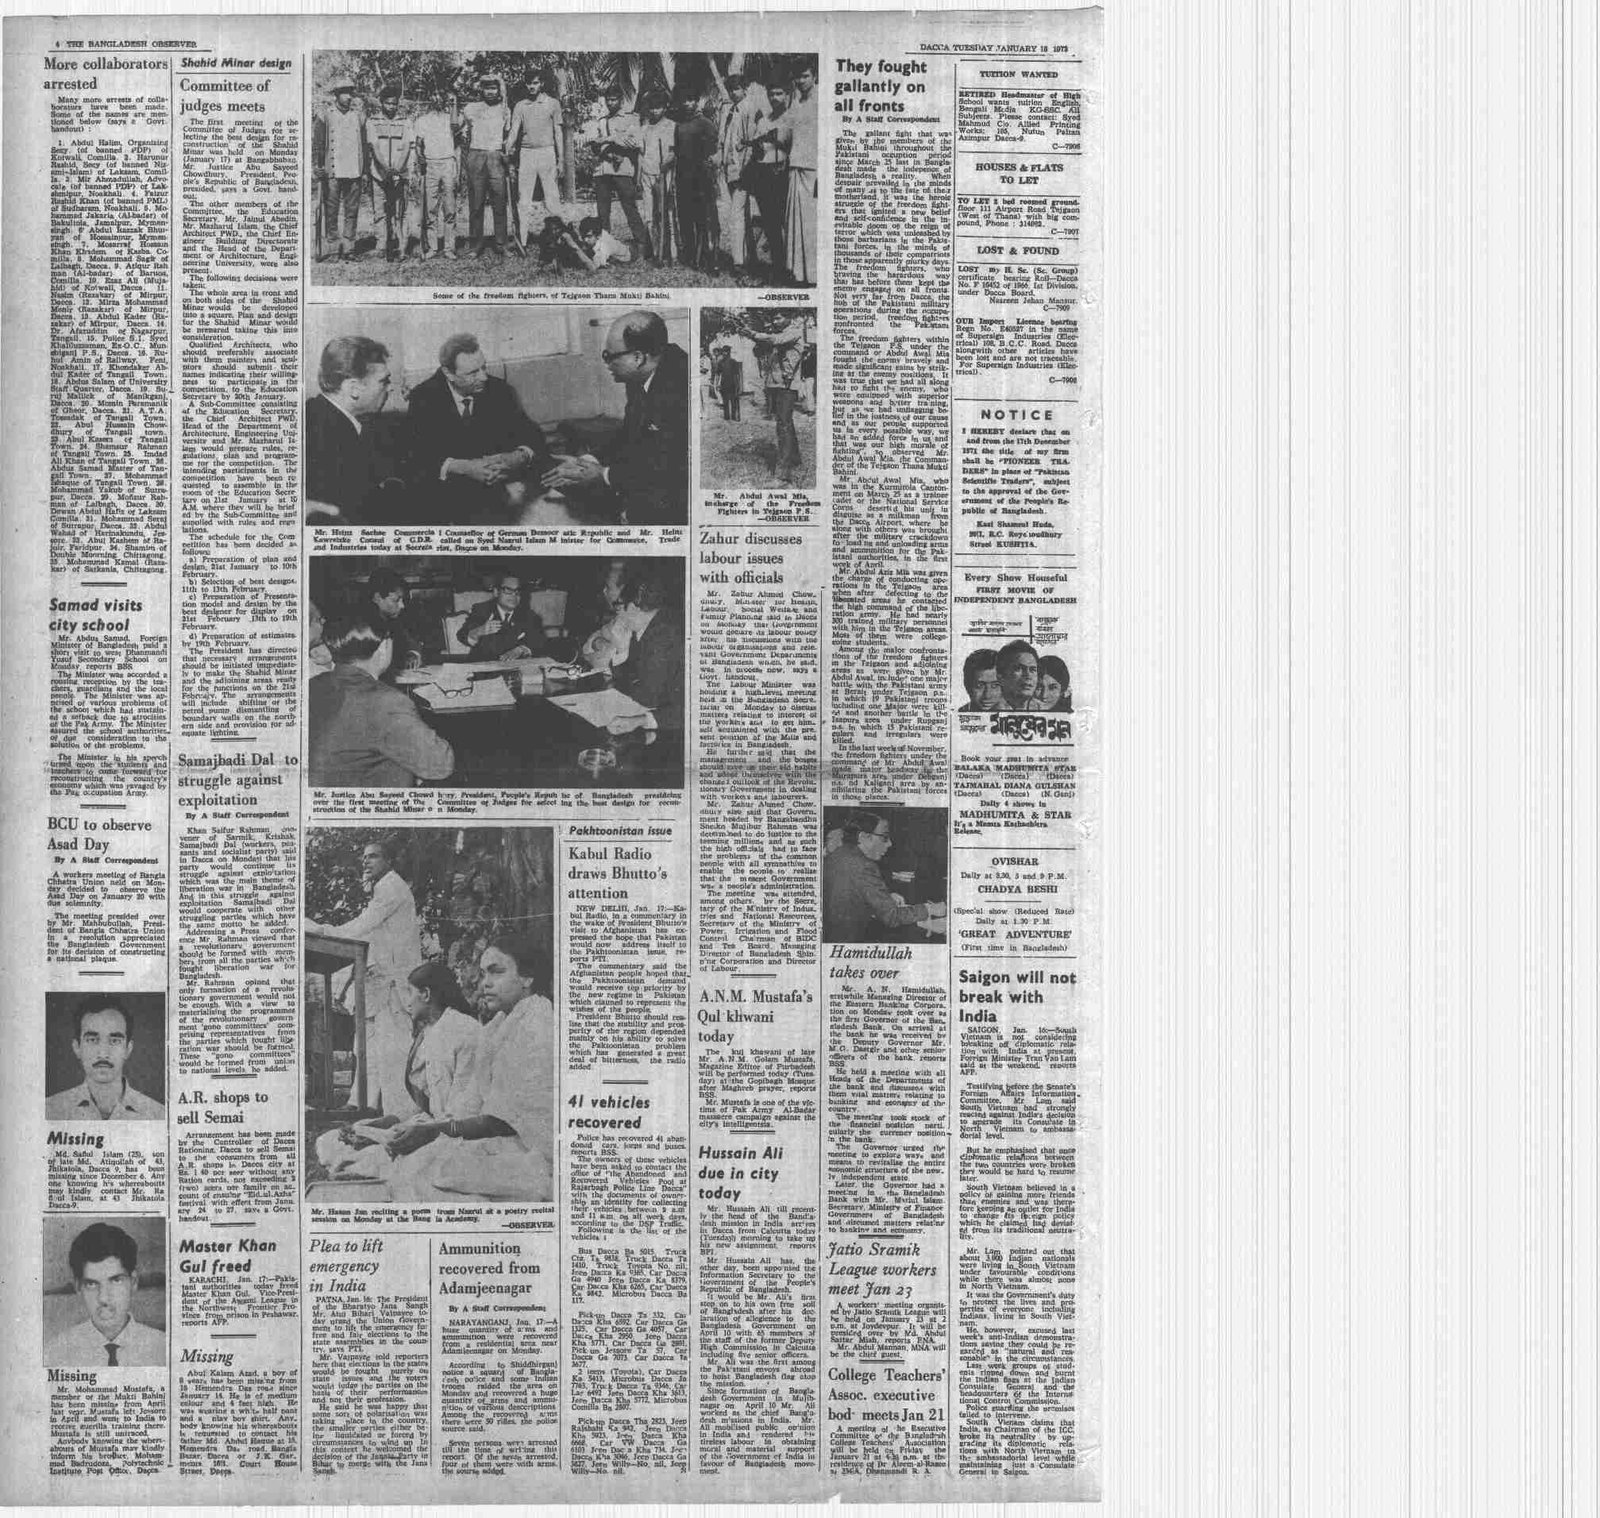 18JAN1972-Bangladesh Observer-Regular-Page 4